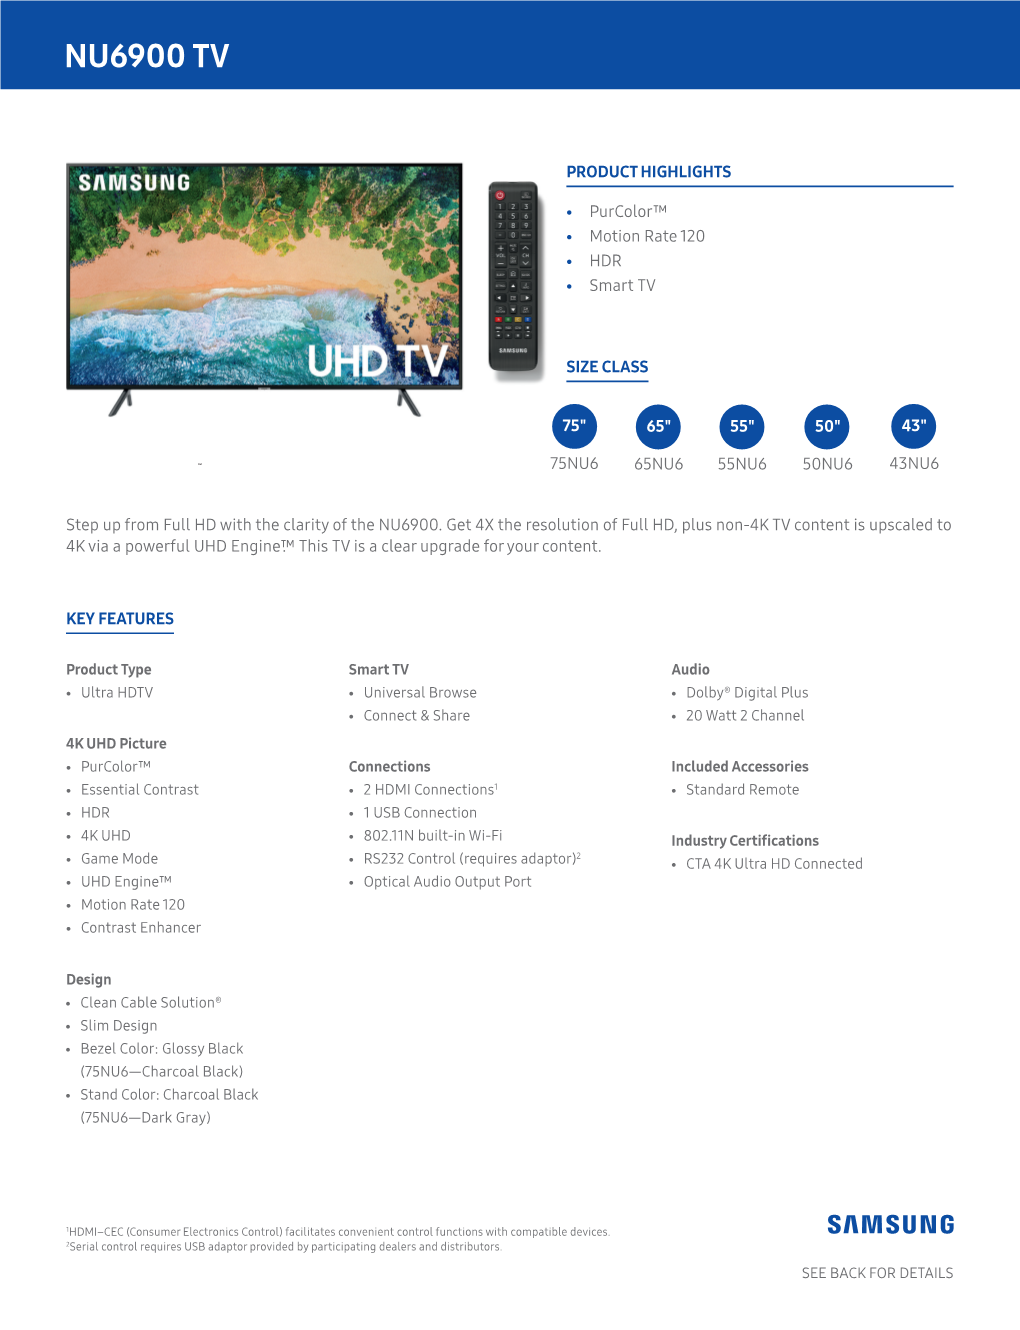 Samsung 55" 4K UHD LED Smart TV UN55NU6900 Specs